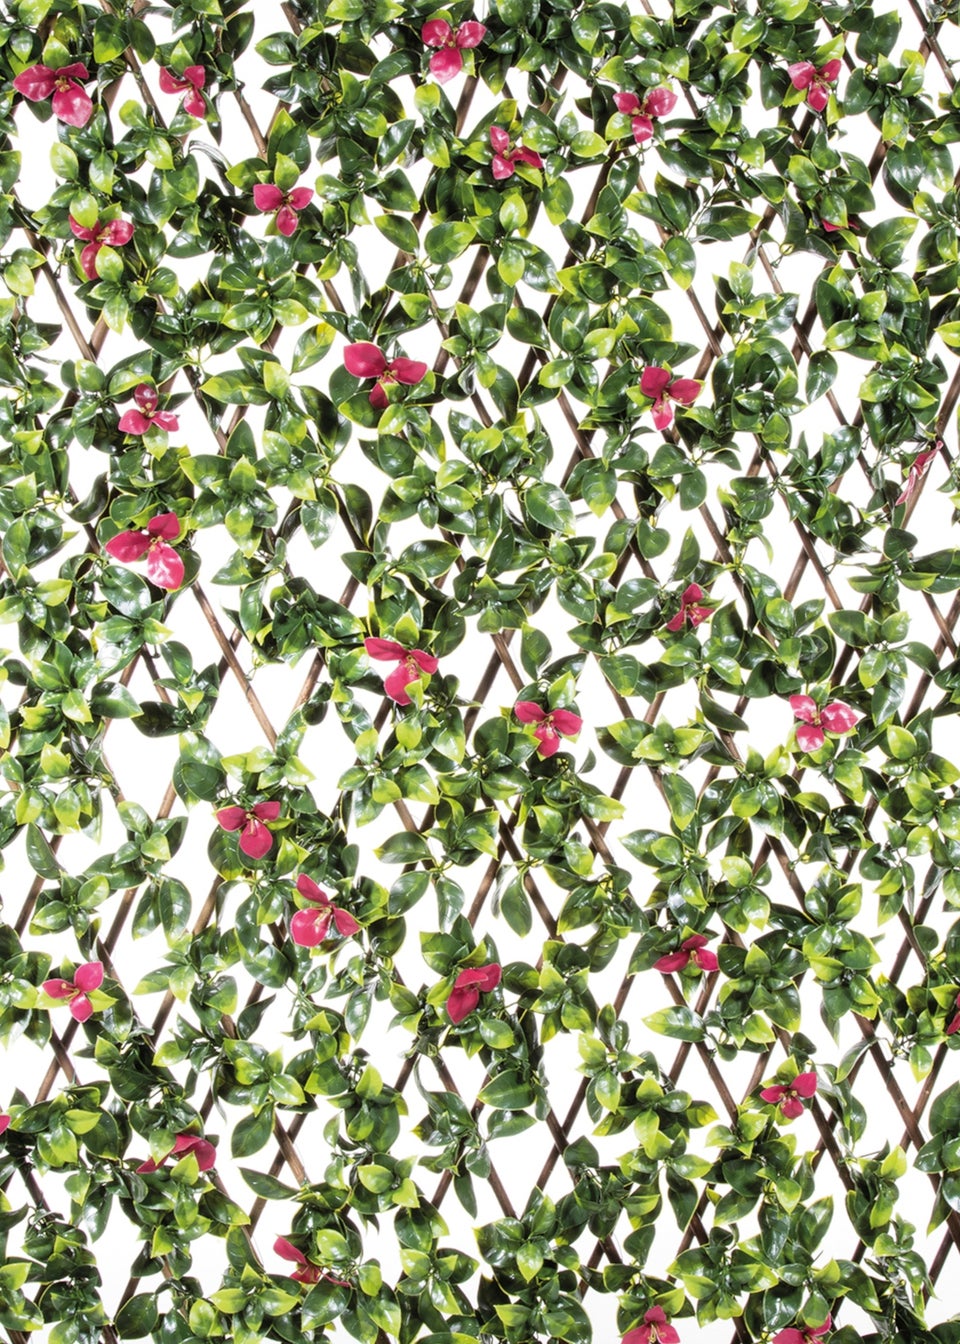 Premier Decorations Artificial Gardenia Leaves Willow Trellis (130cm x 270cm)